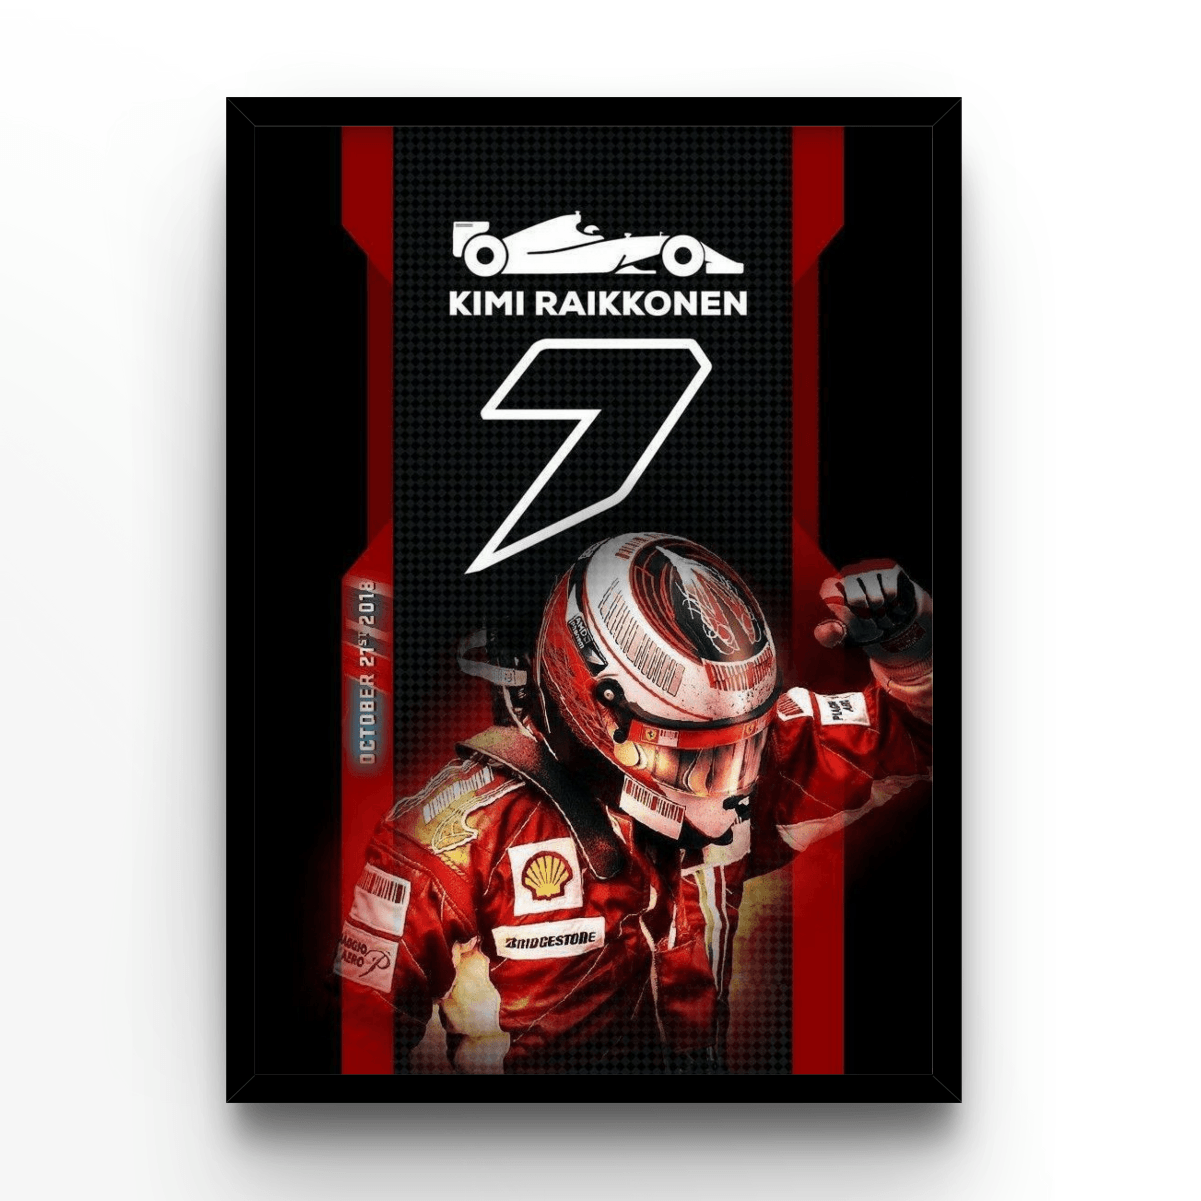 Kimi Räikkönen 2 - A4, A3, A2 Posters Base - Poster Print Shop / Art Prints / PostersBase